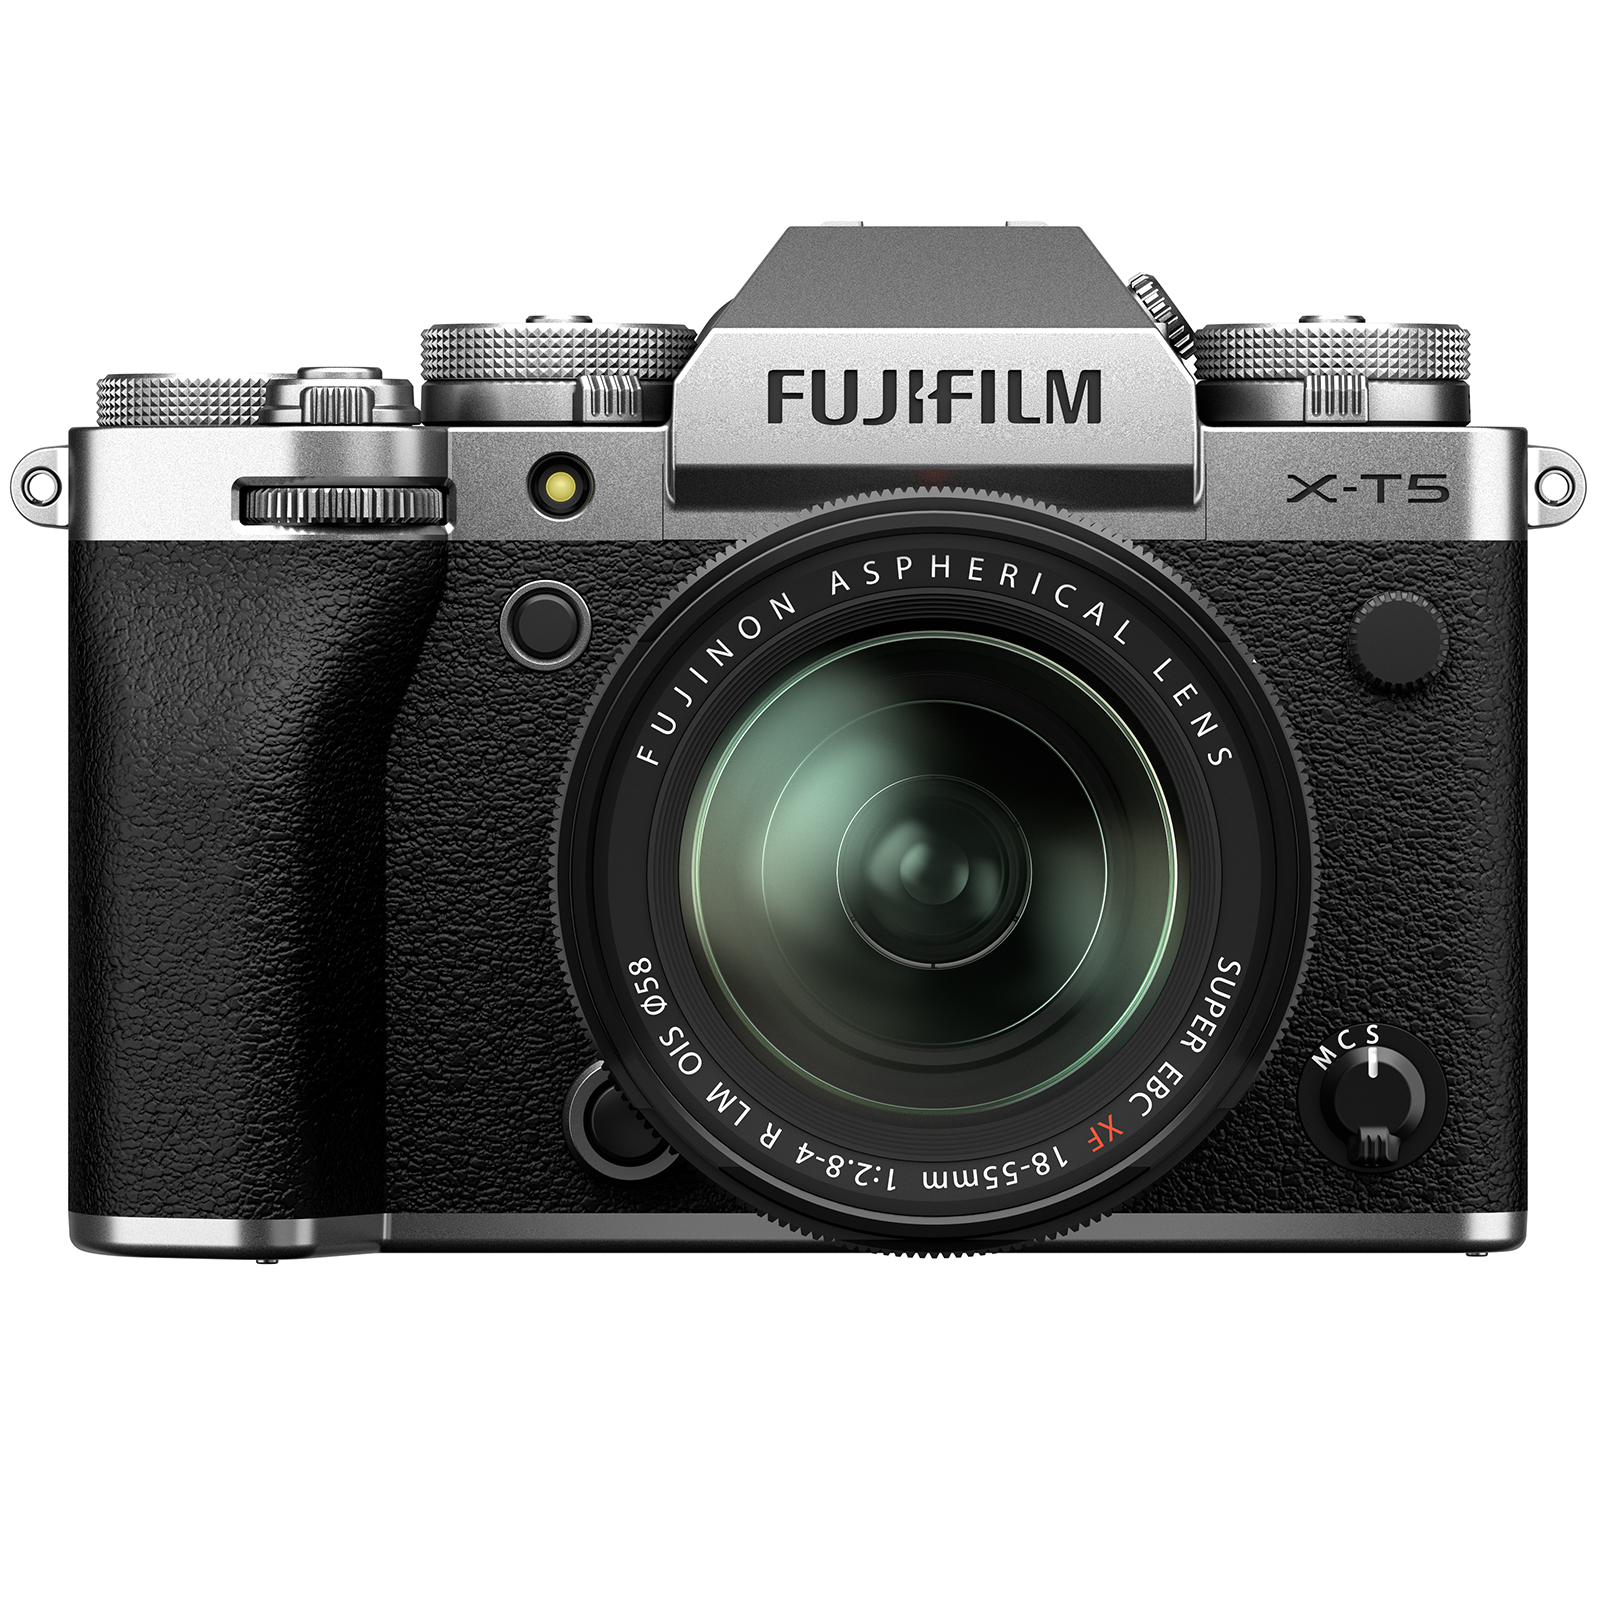 Image of Fujifilm XT5 Digital Camera with XF 1855mm Lens Silver